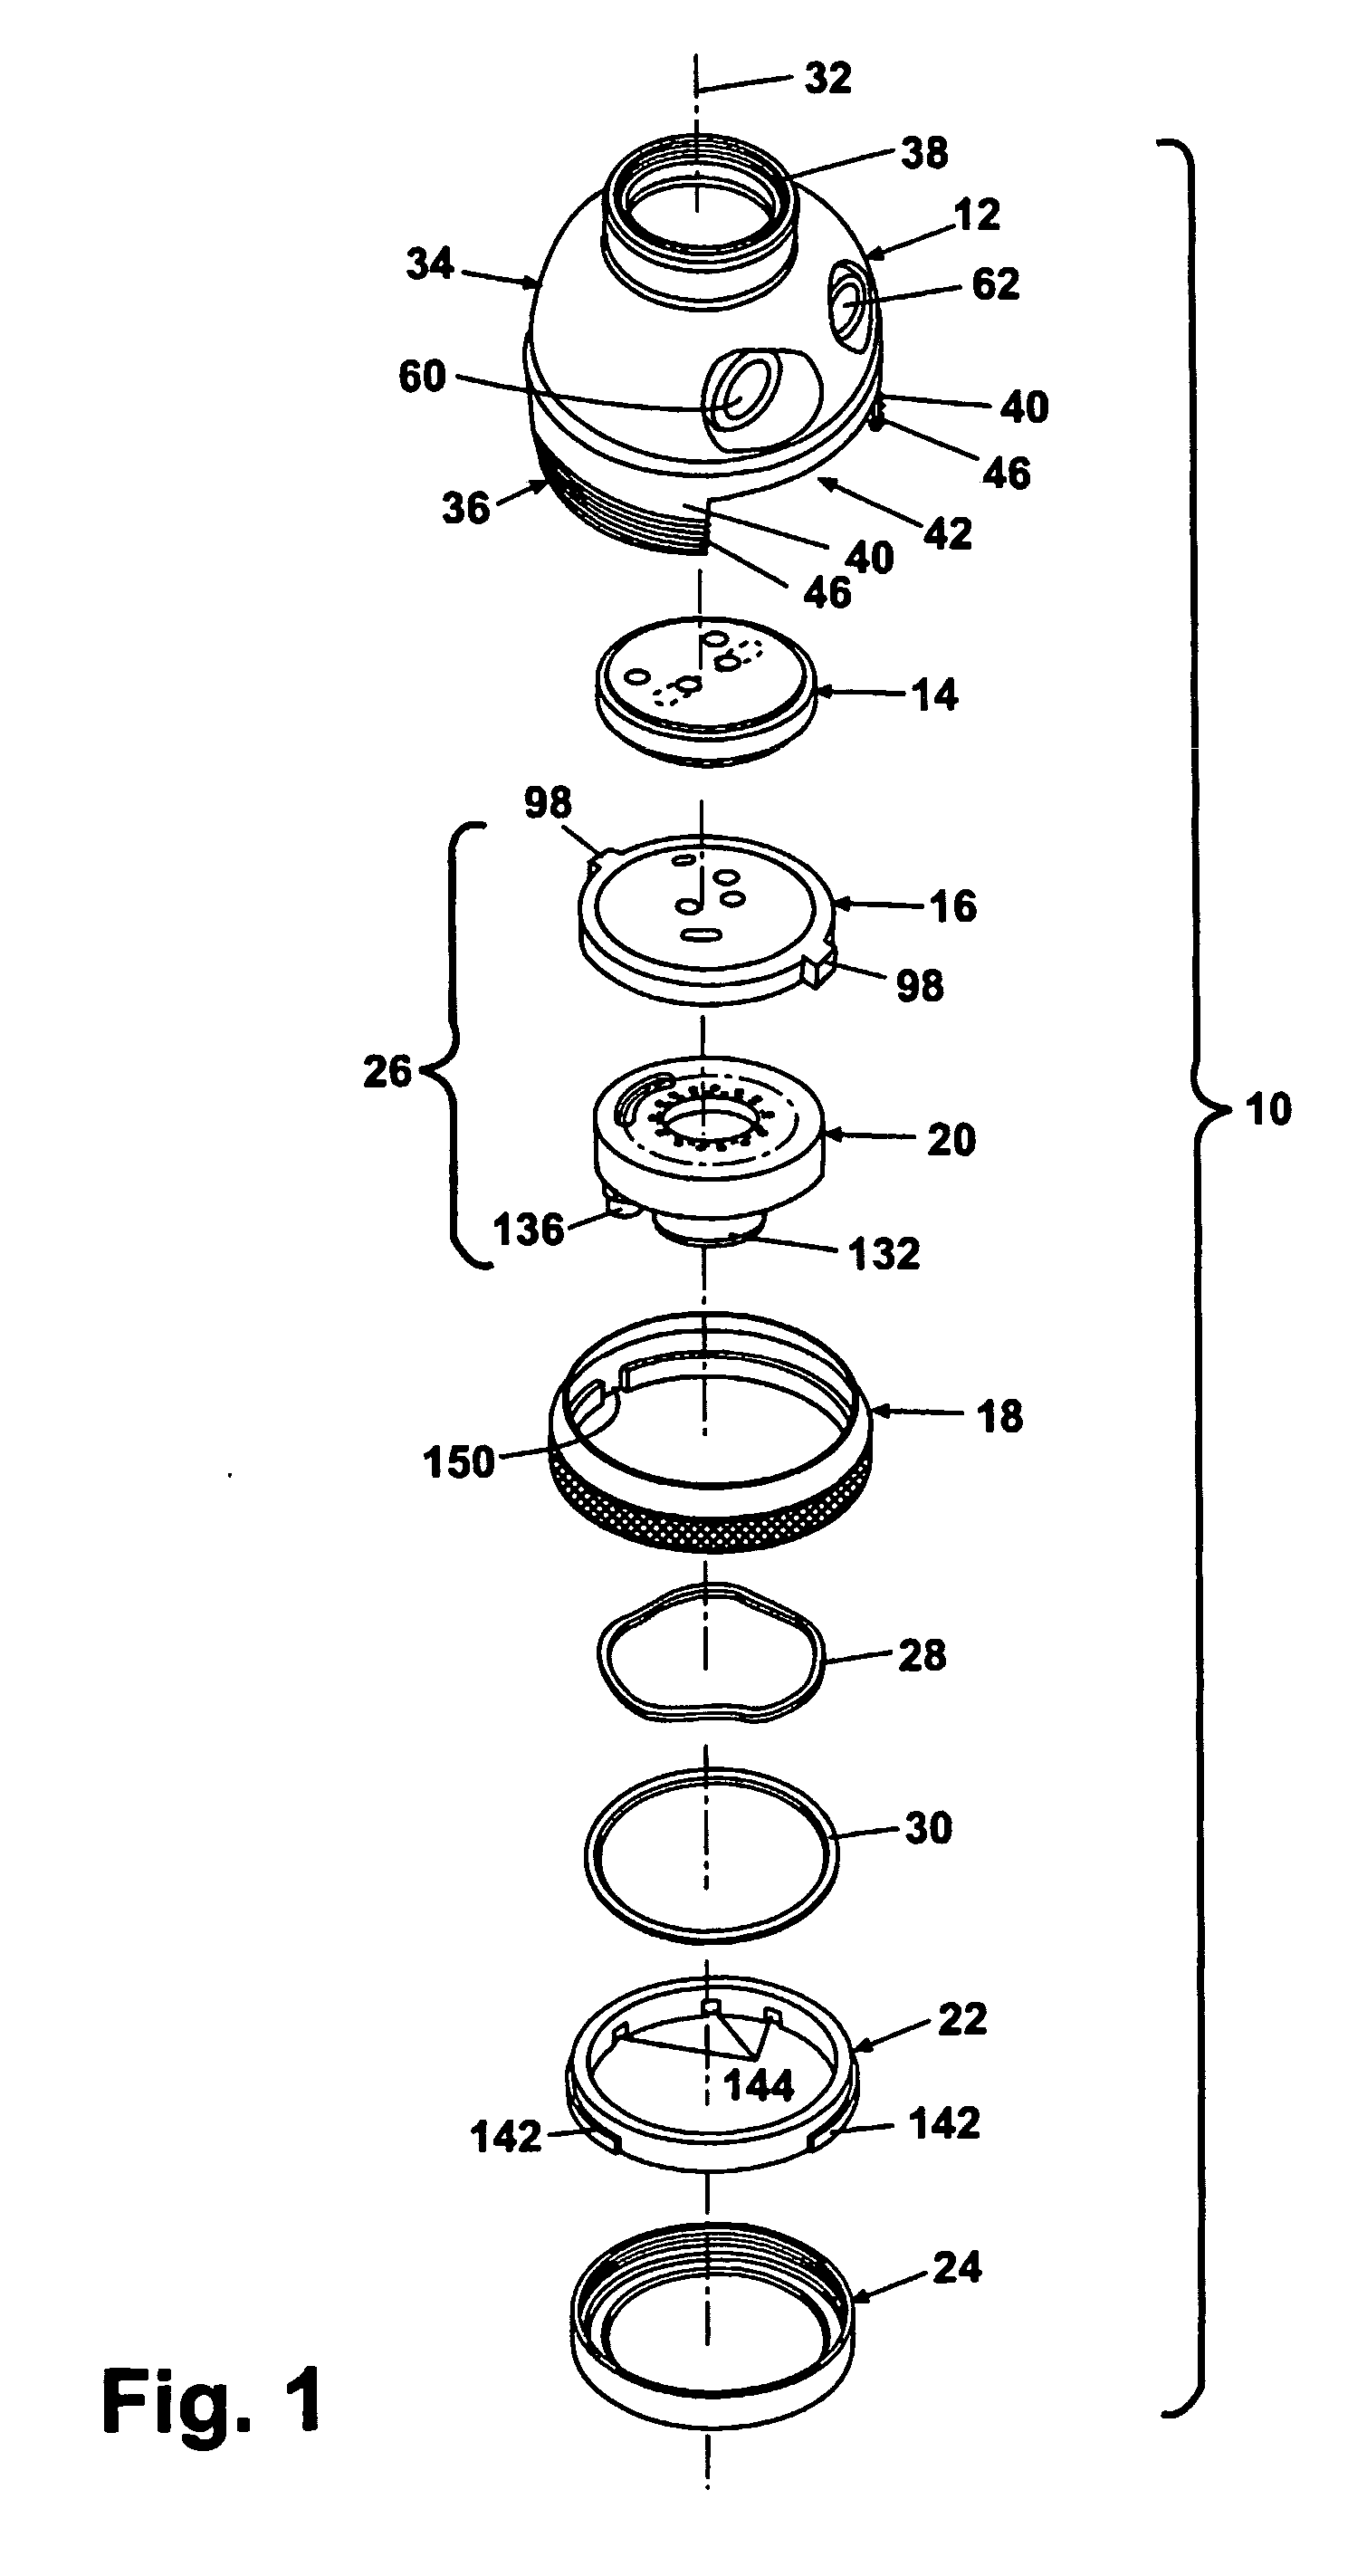 Diverter valve